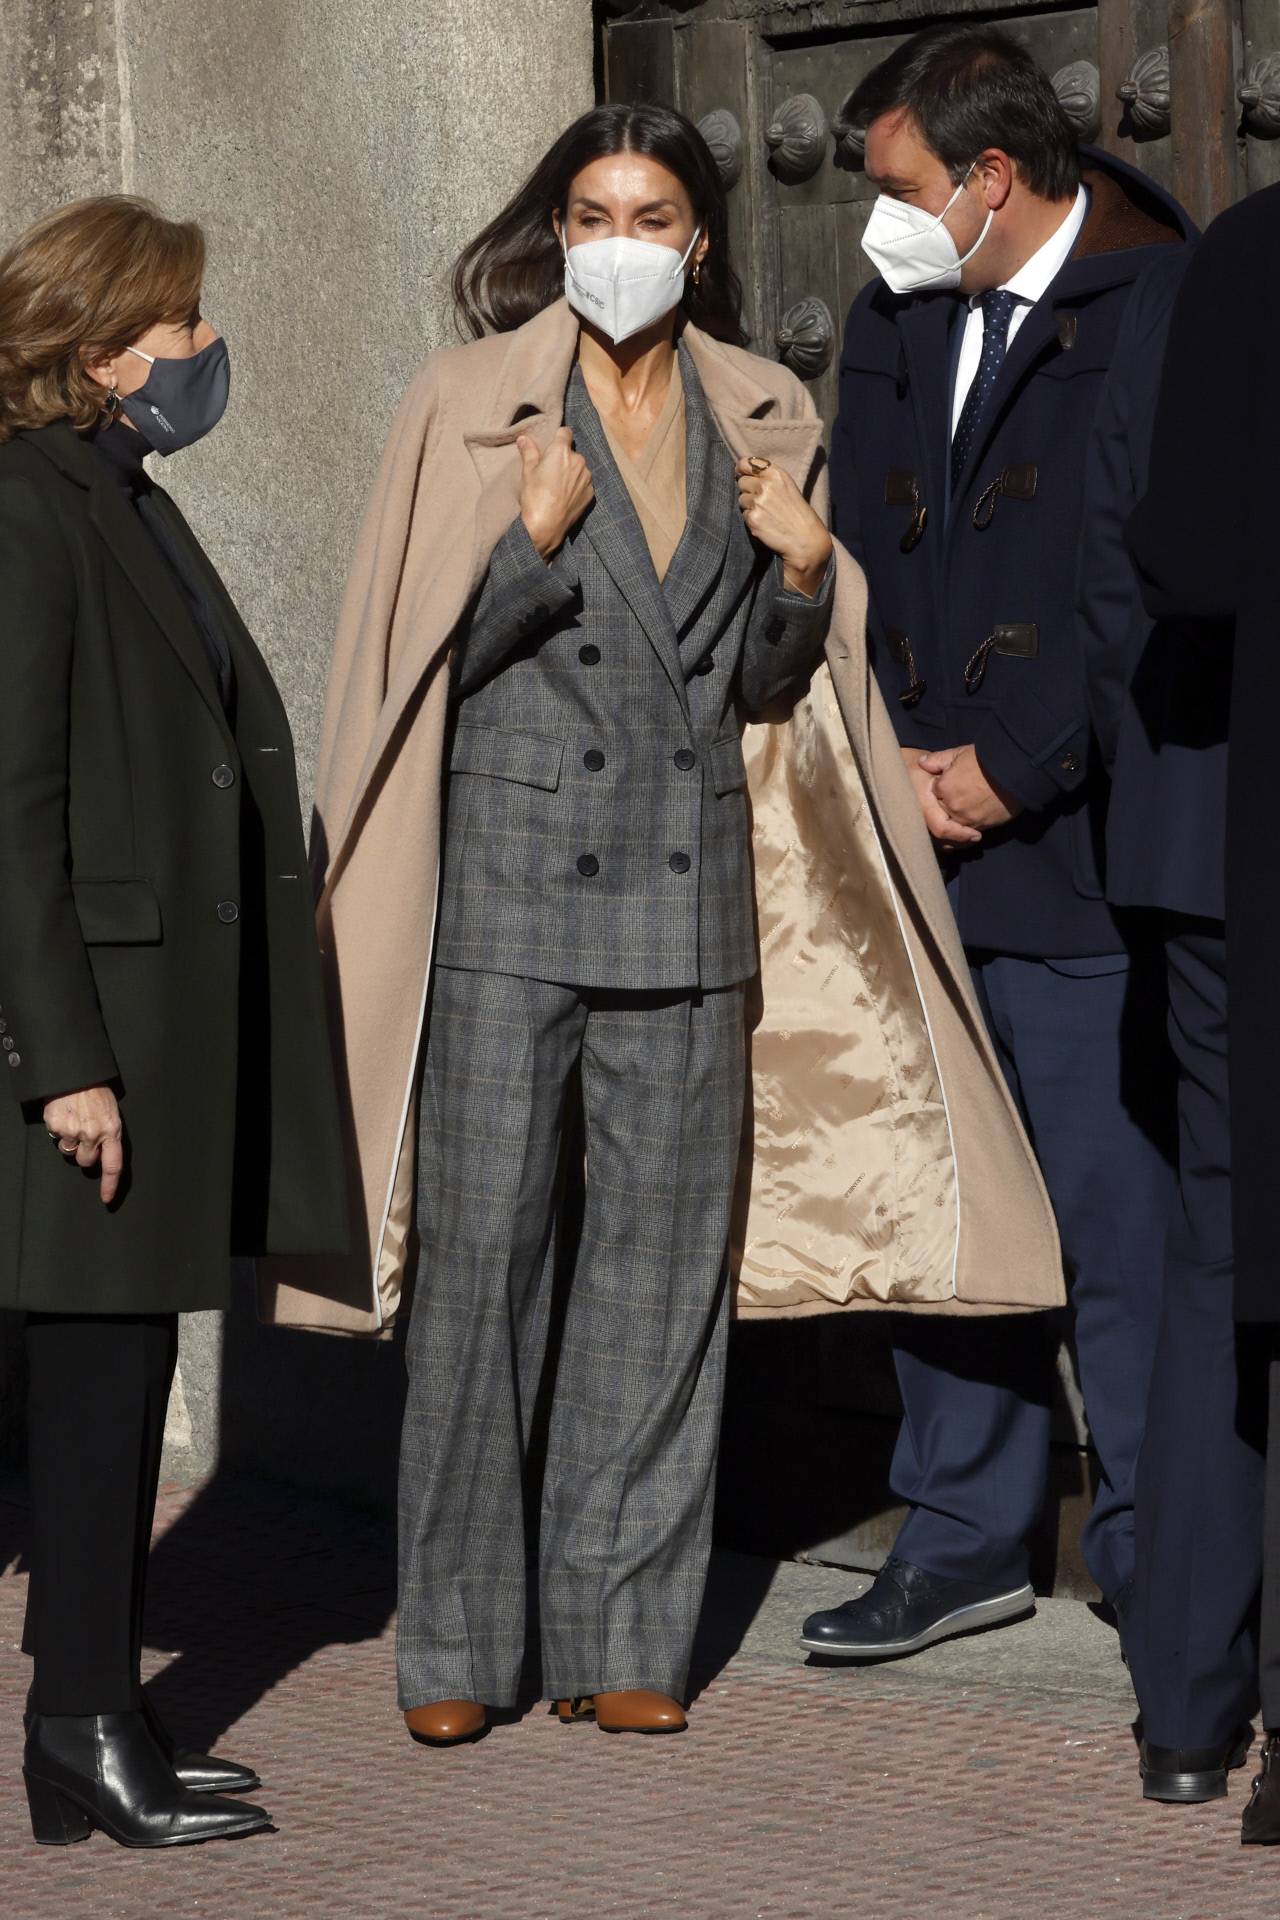 La reina Letizia con sastre de Hugo Boss y abrigo de Caramelo.